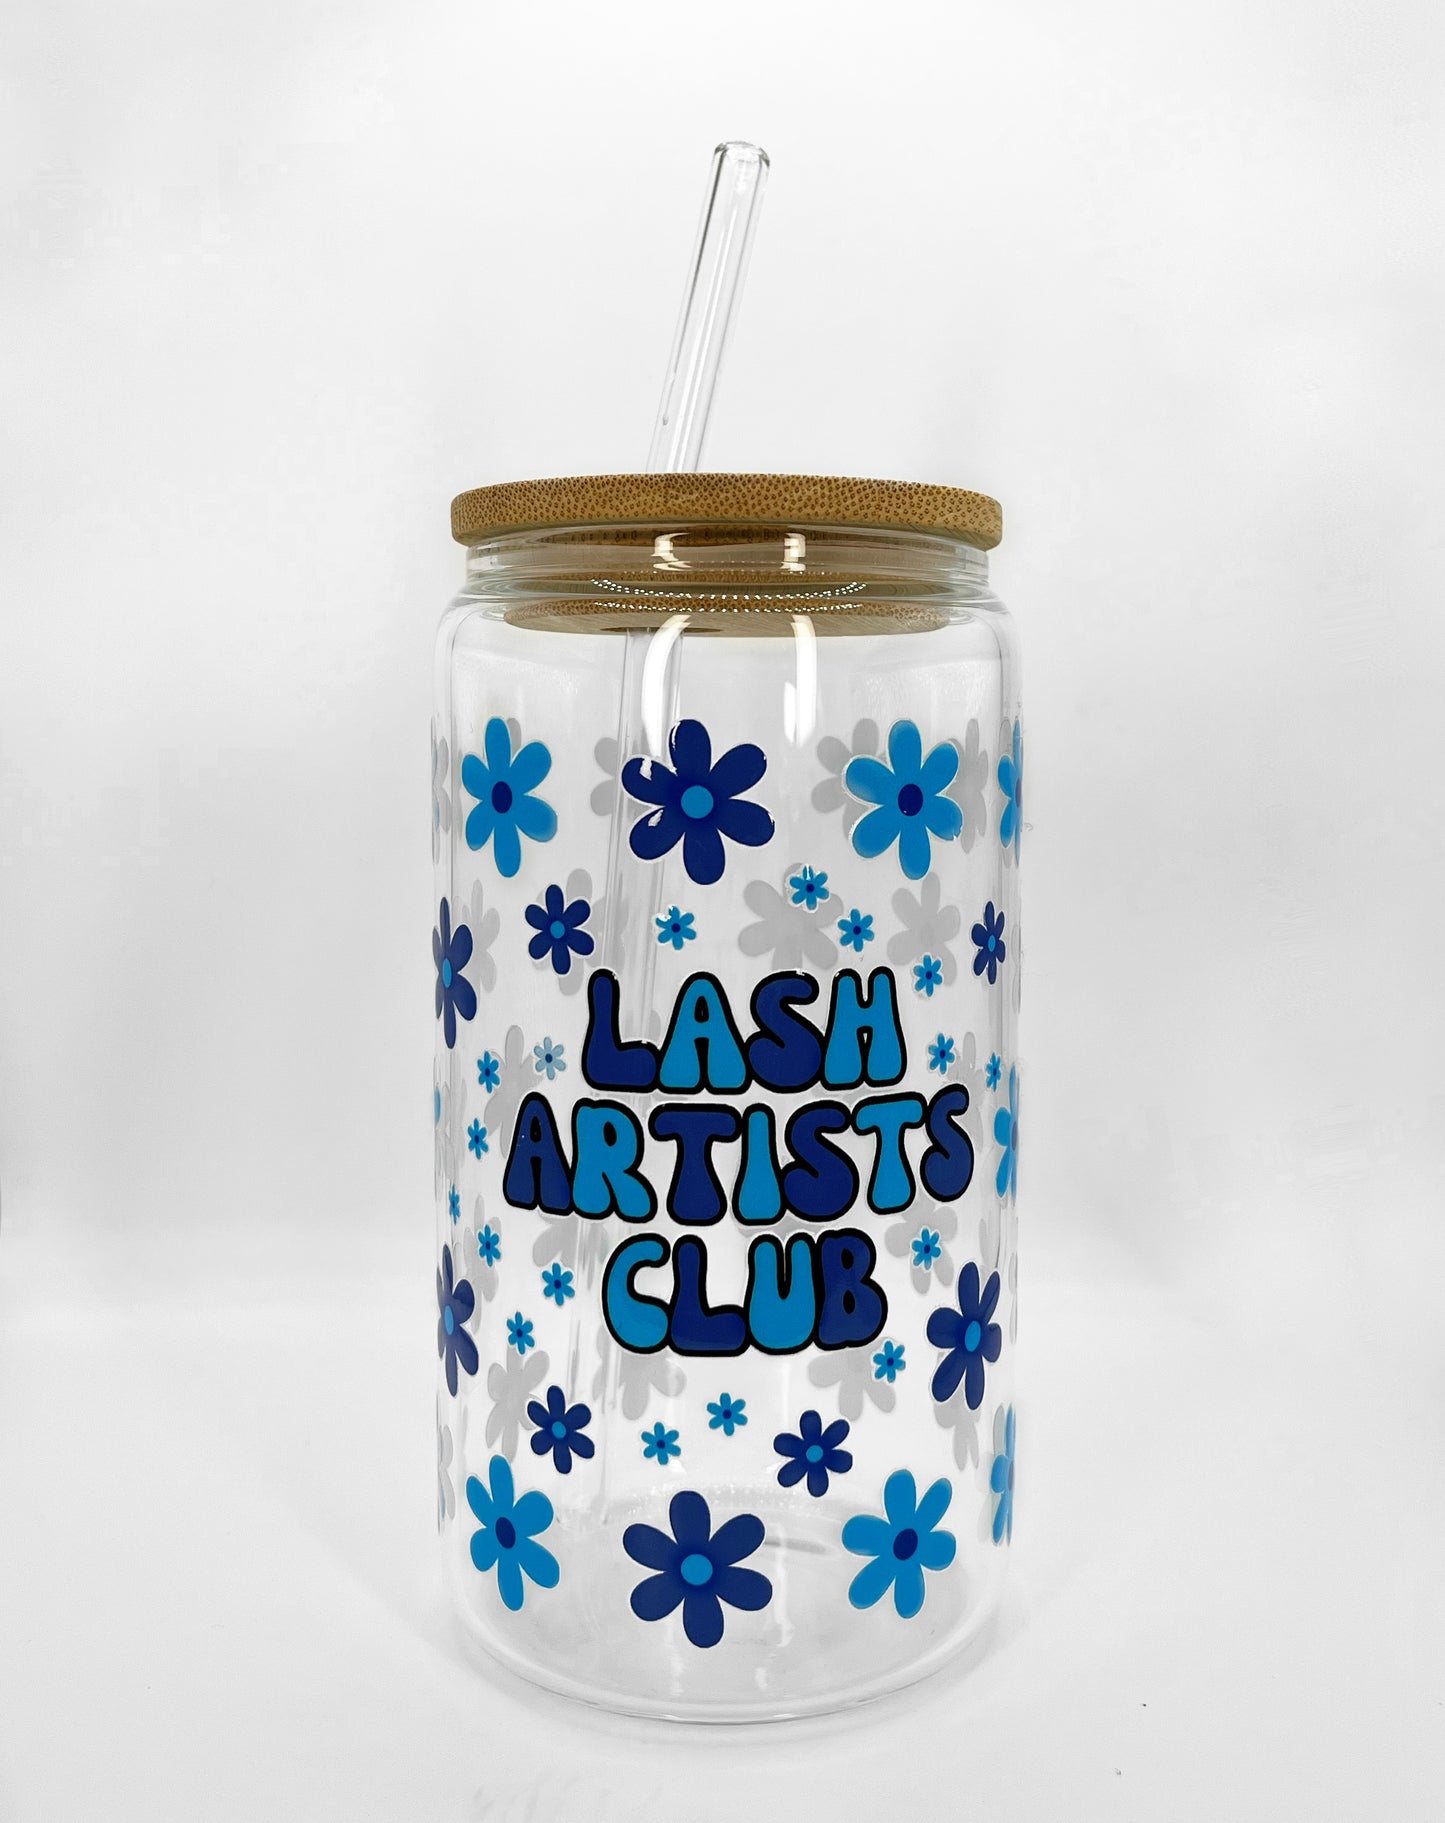 Lash artists club ♡ Glass Can